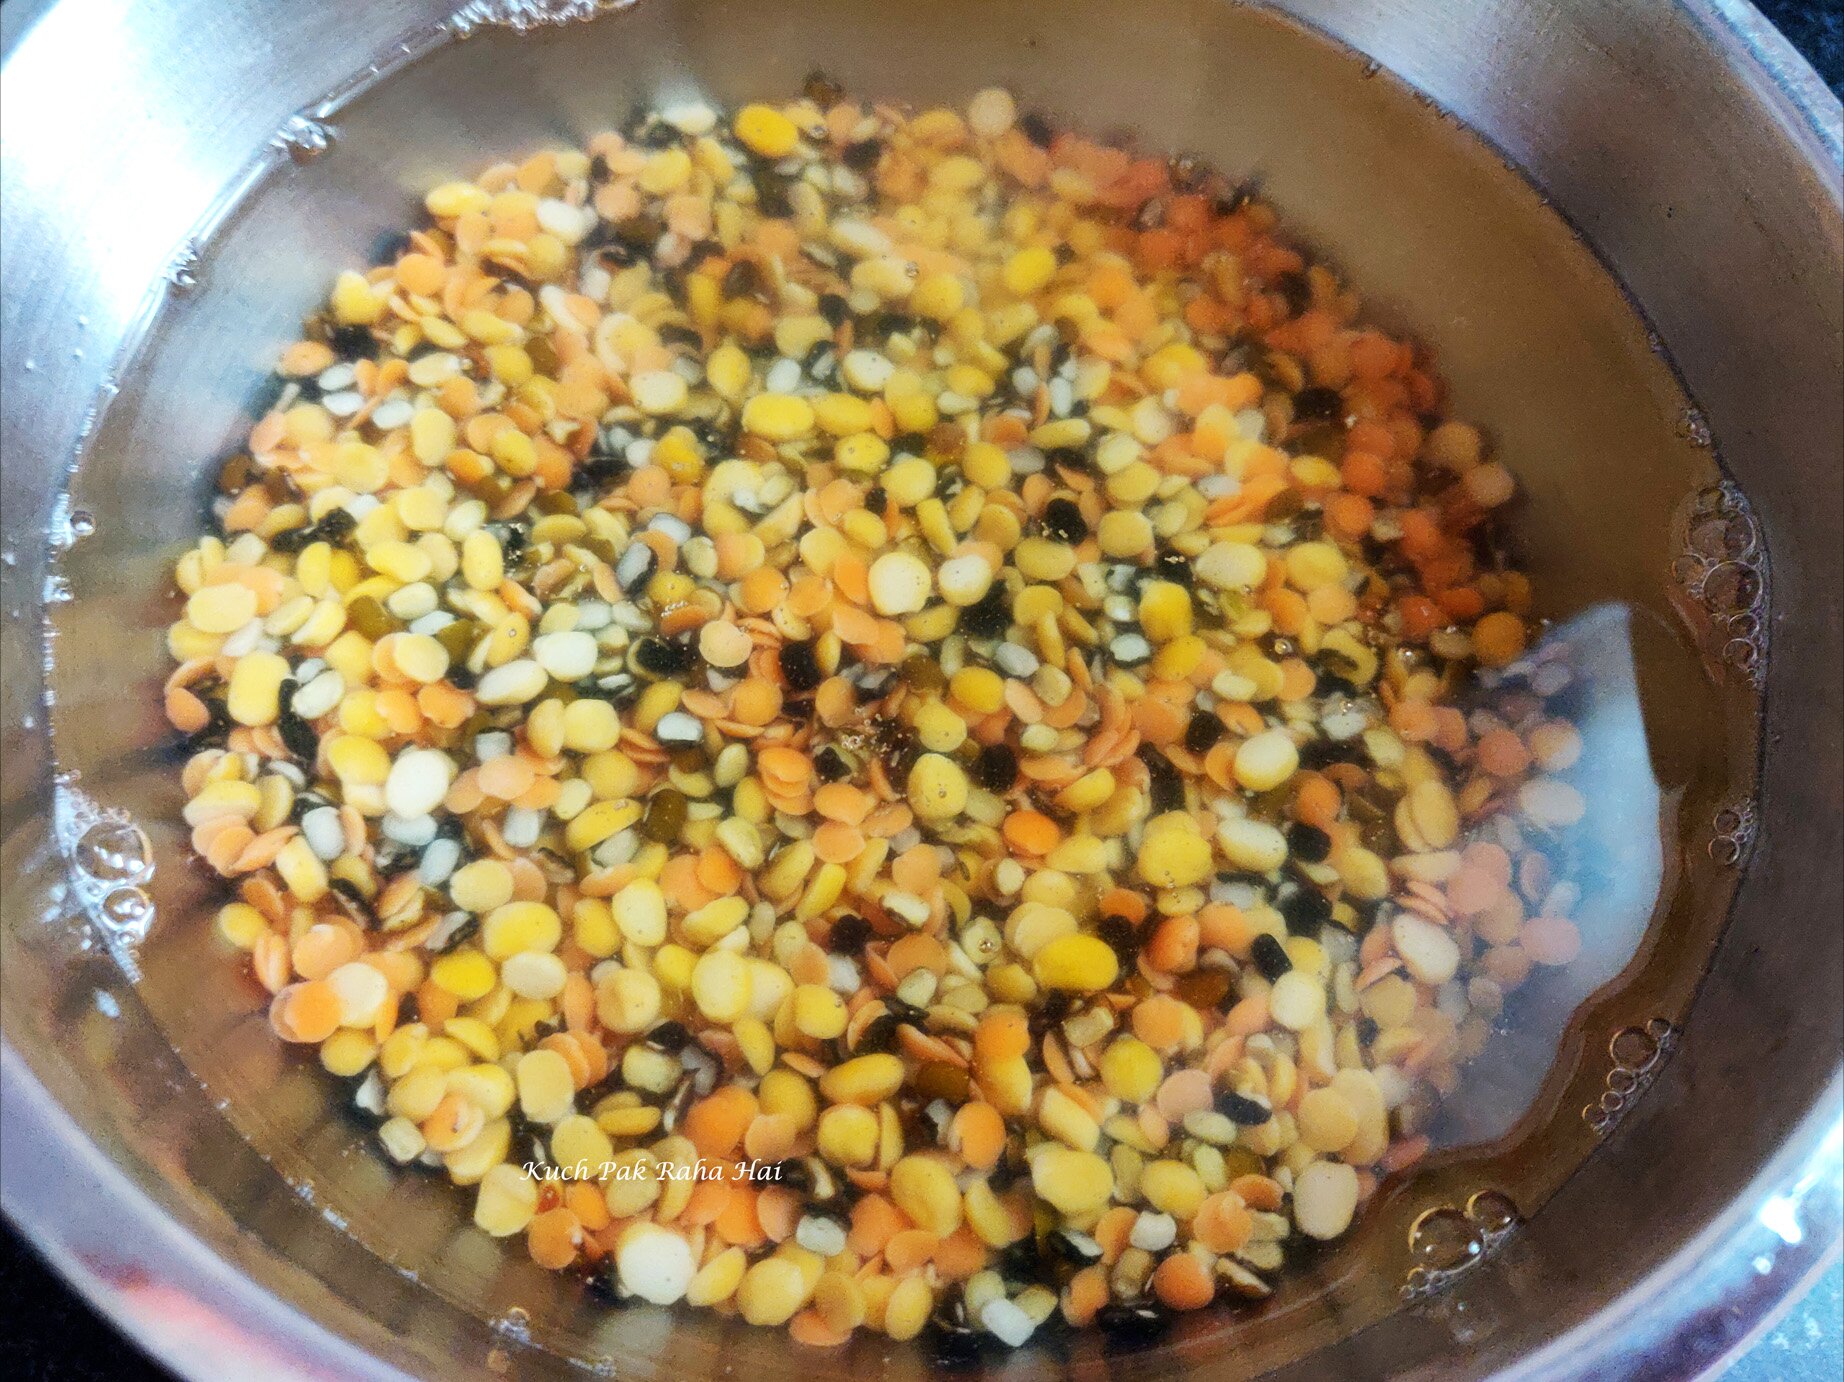 Soaking lentils in water before cooking.